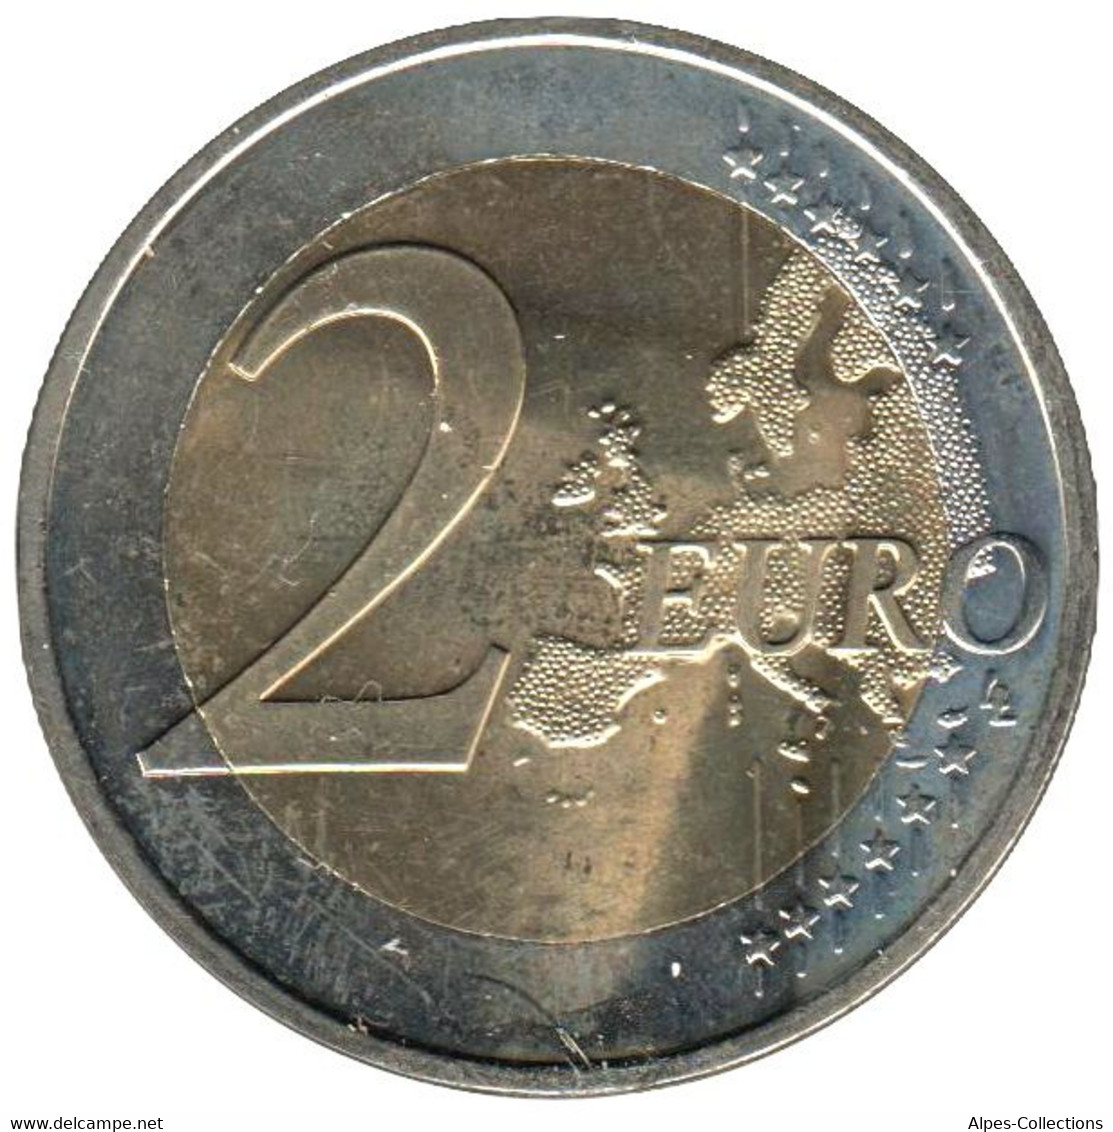 SQ20019.1 - SLOVAQUIE - 2 Euros Commémo. Milan Rastislav Stefanik - 2019 - Slowakei